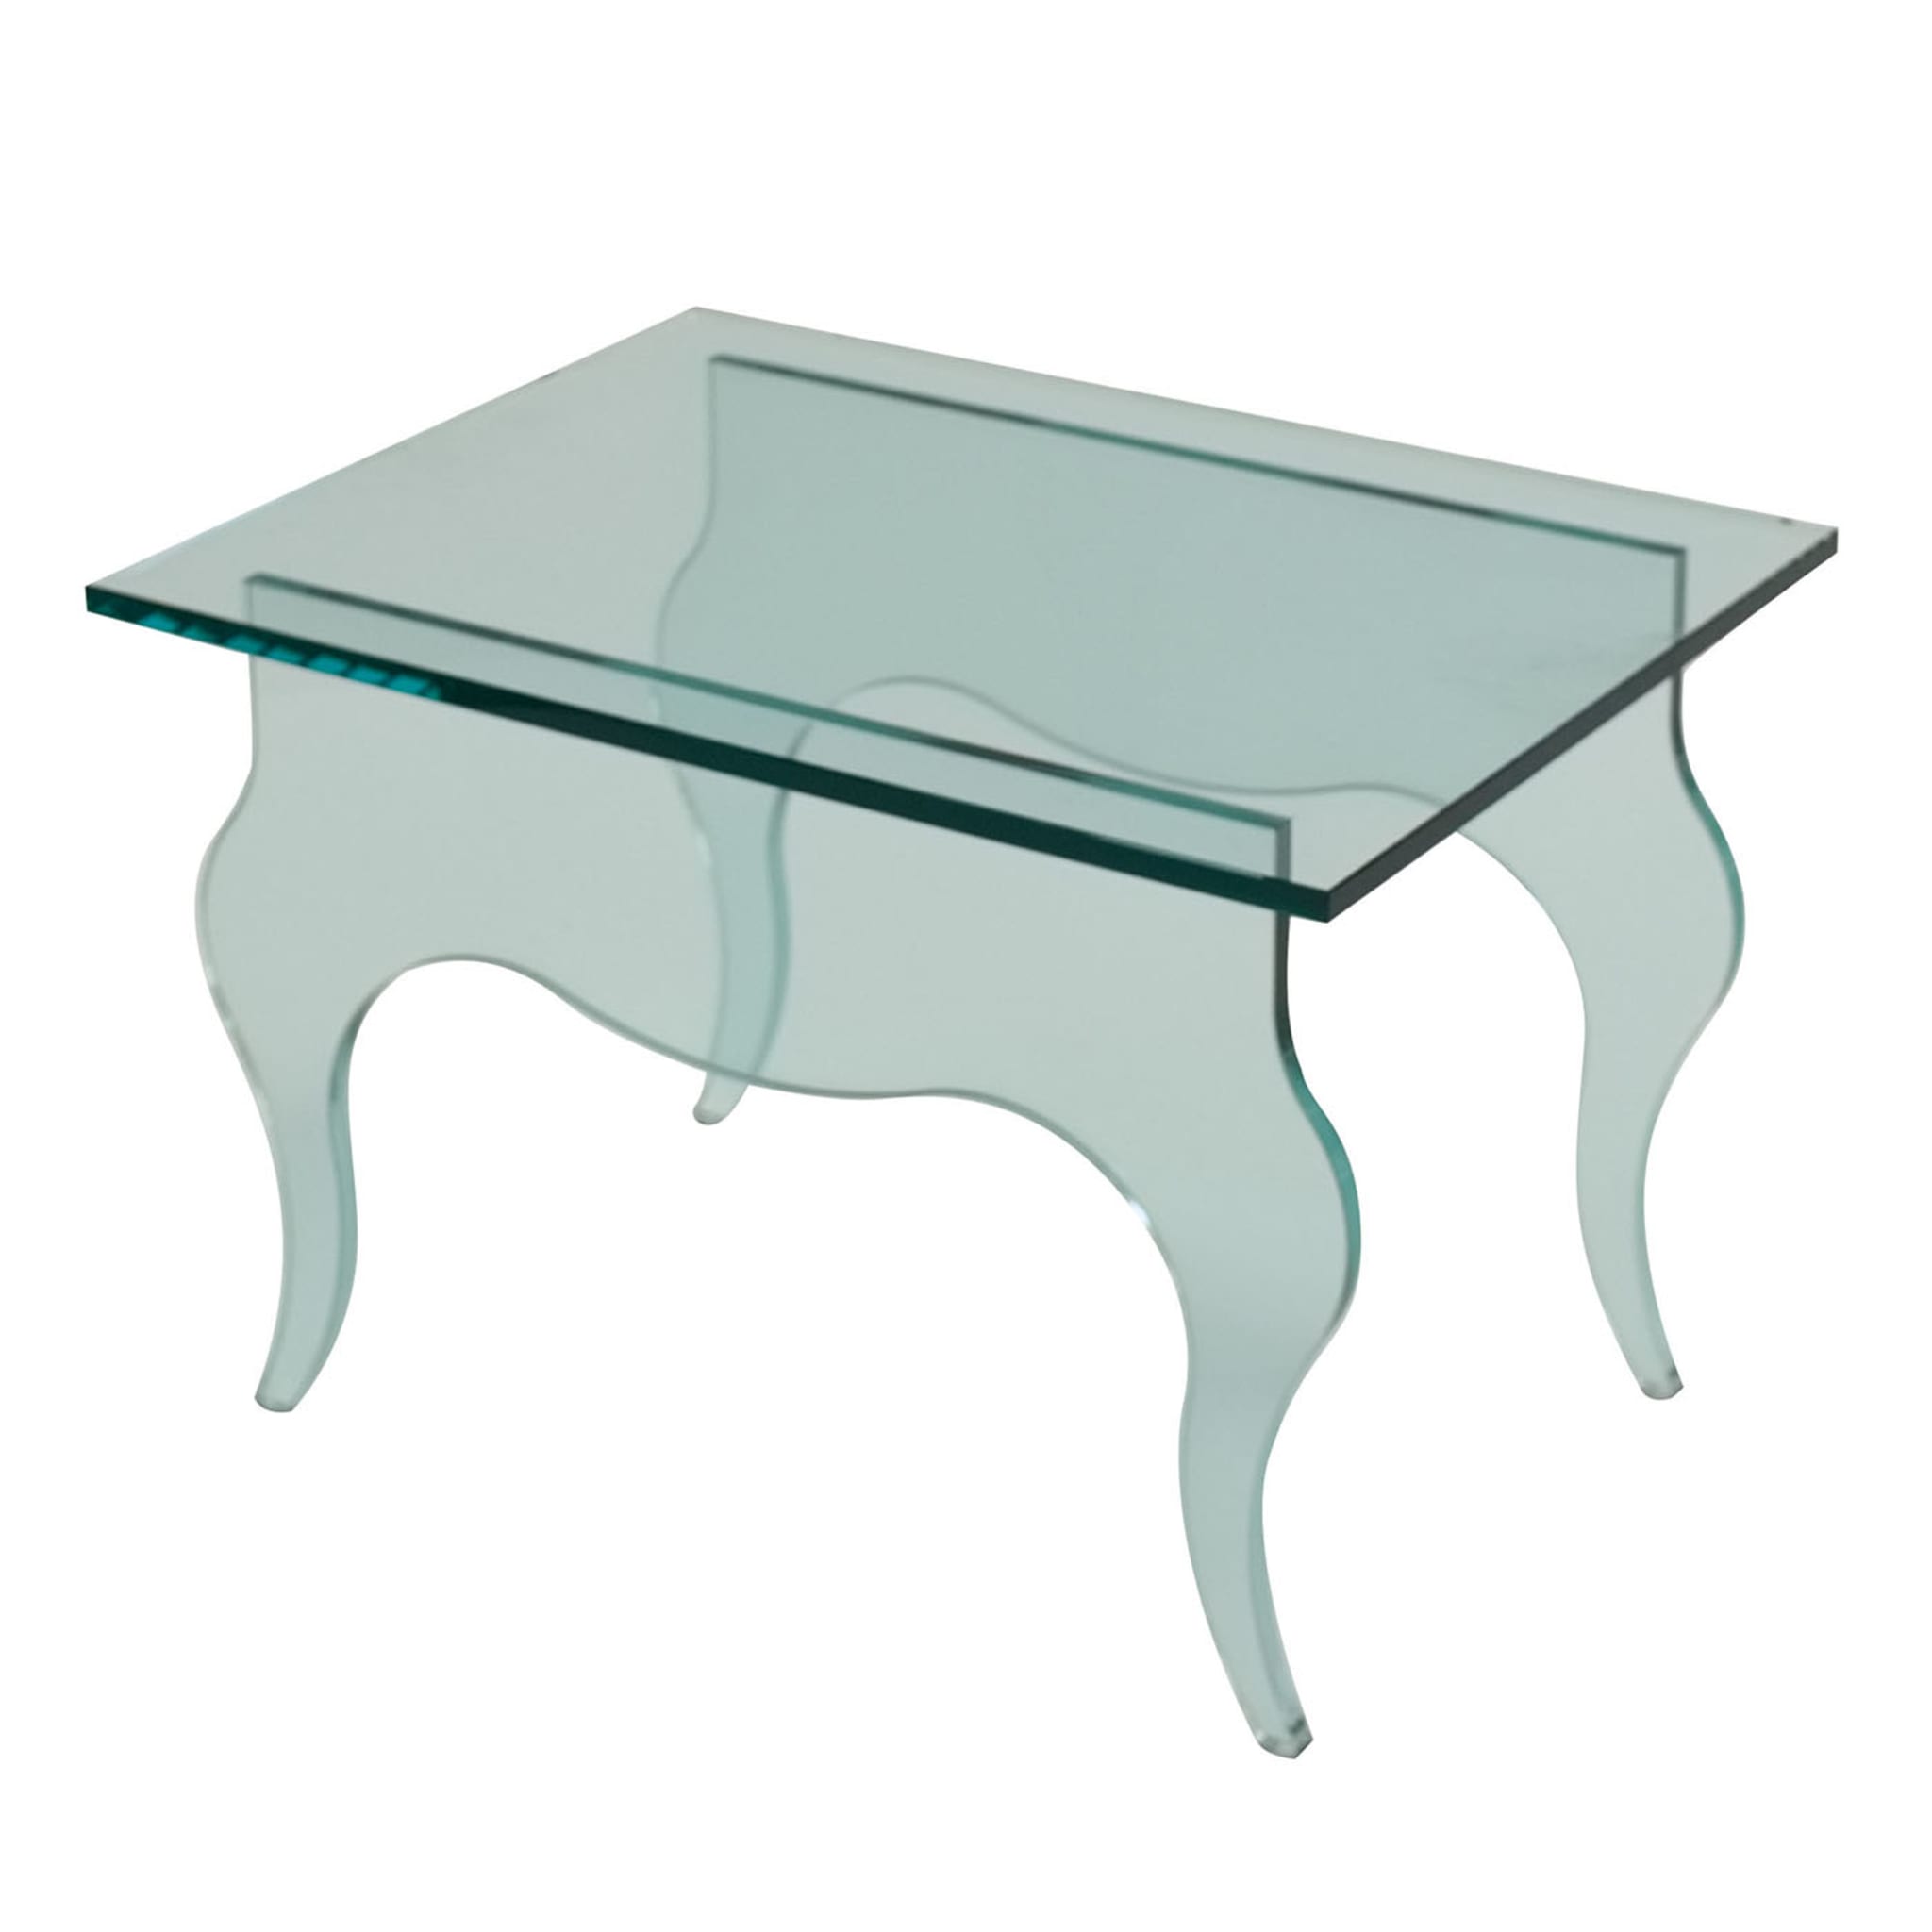 Edmondo Side Table by Andrea Petterini - Main view